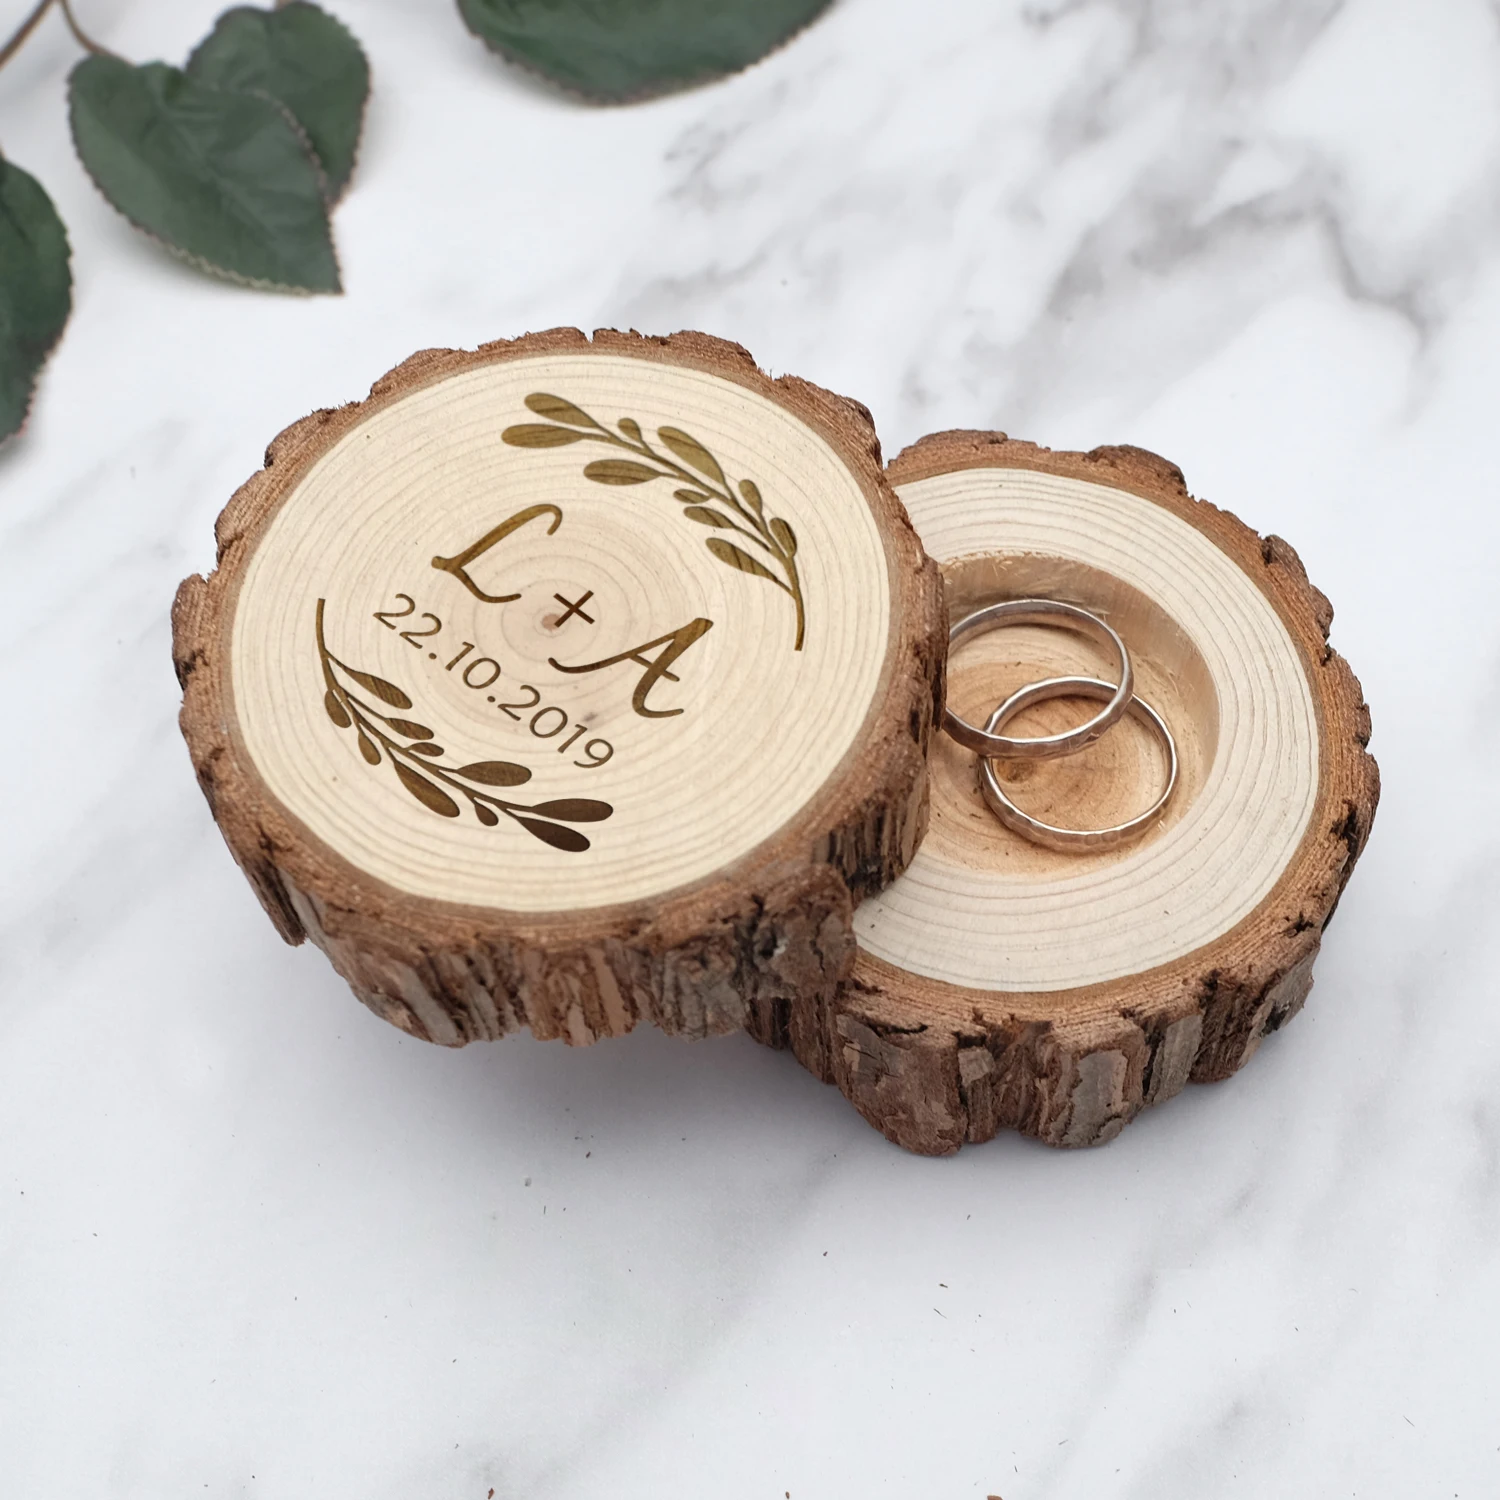 Rustic Wedding Ring Box,Custom Engraved Wood Ring Boxes,Personalized Wooden Ring Holder,Country Wedding Ring Box - Цвет: Флуоресцентный желтый